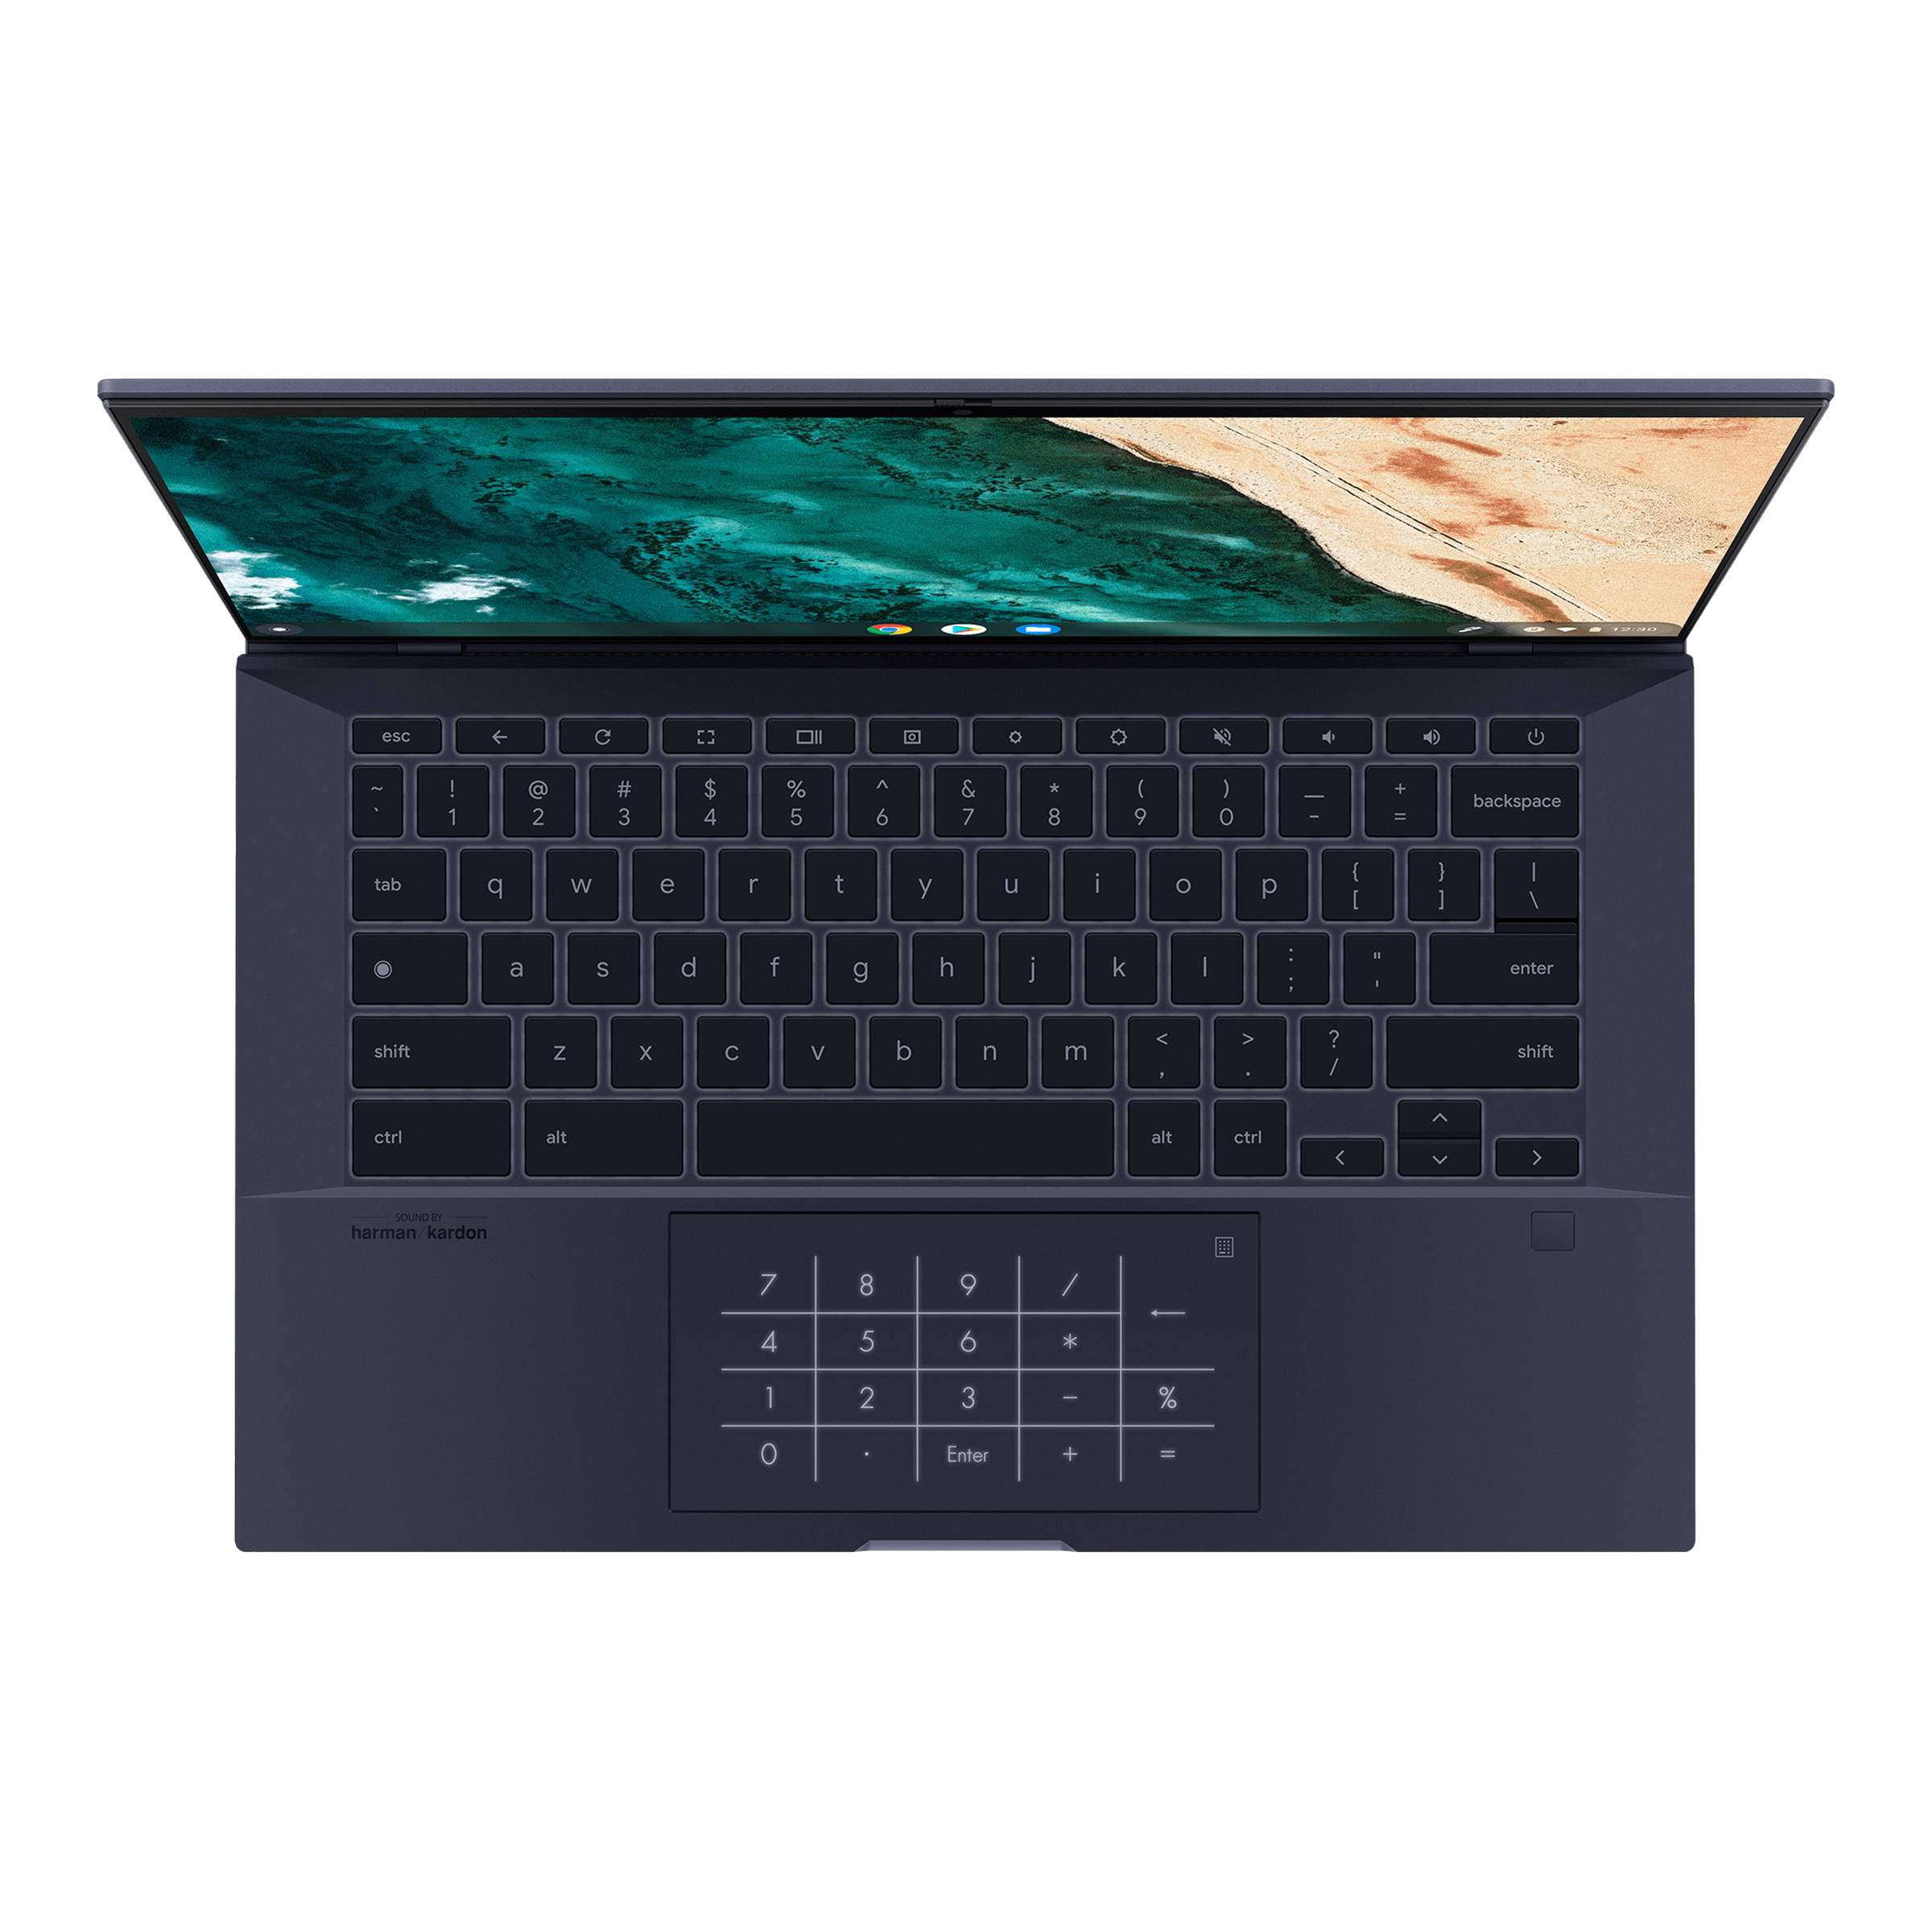 ASUS Chromebook CX9 (CB9400, 11th Gen Intel)